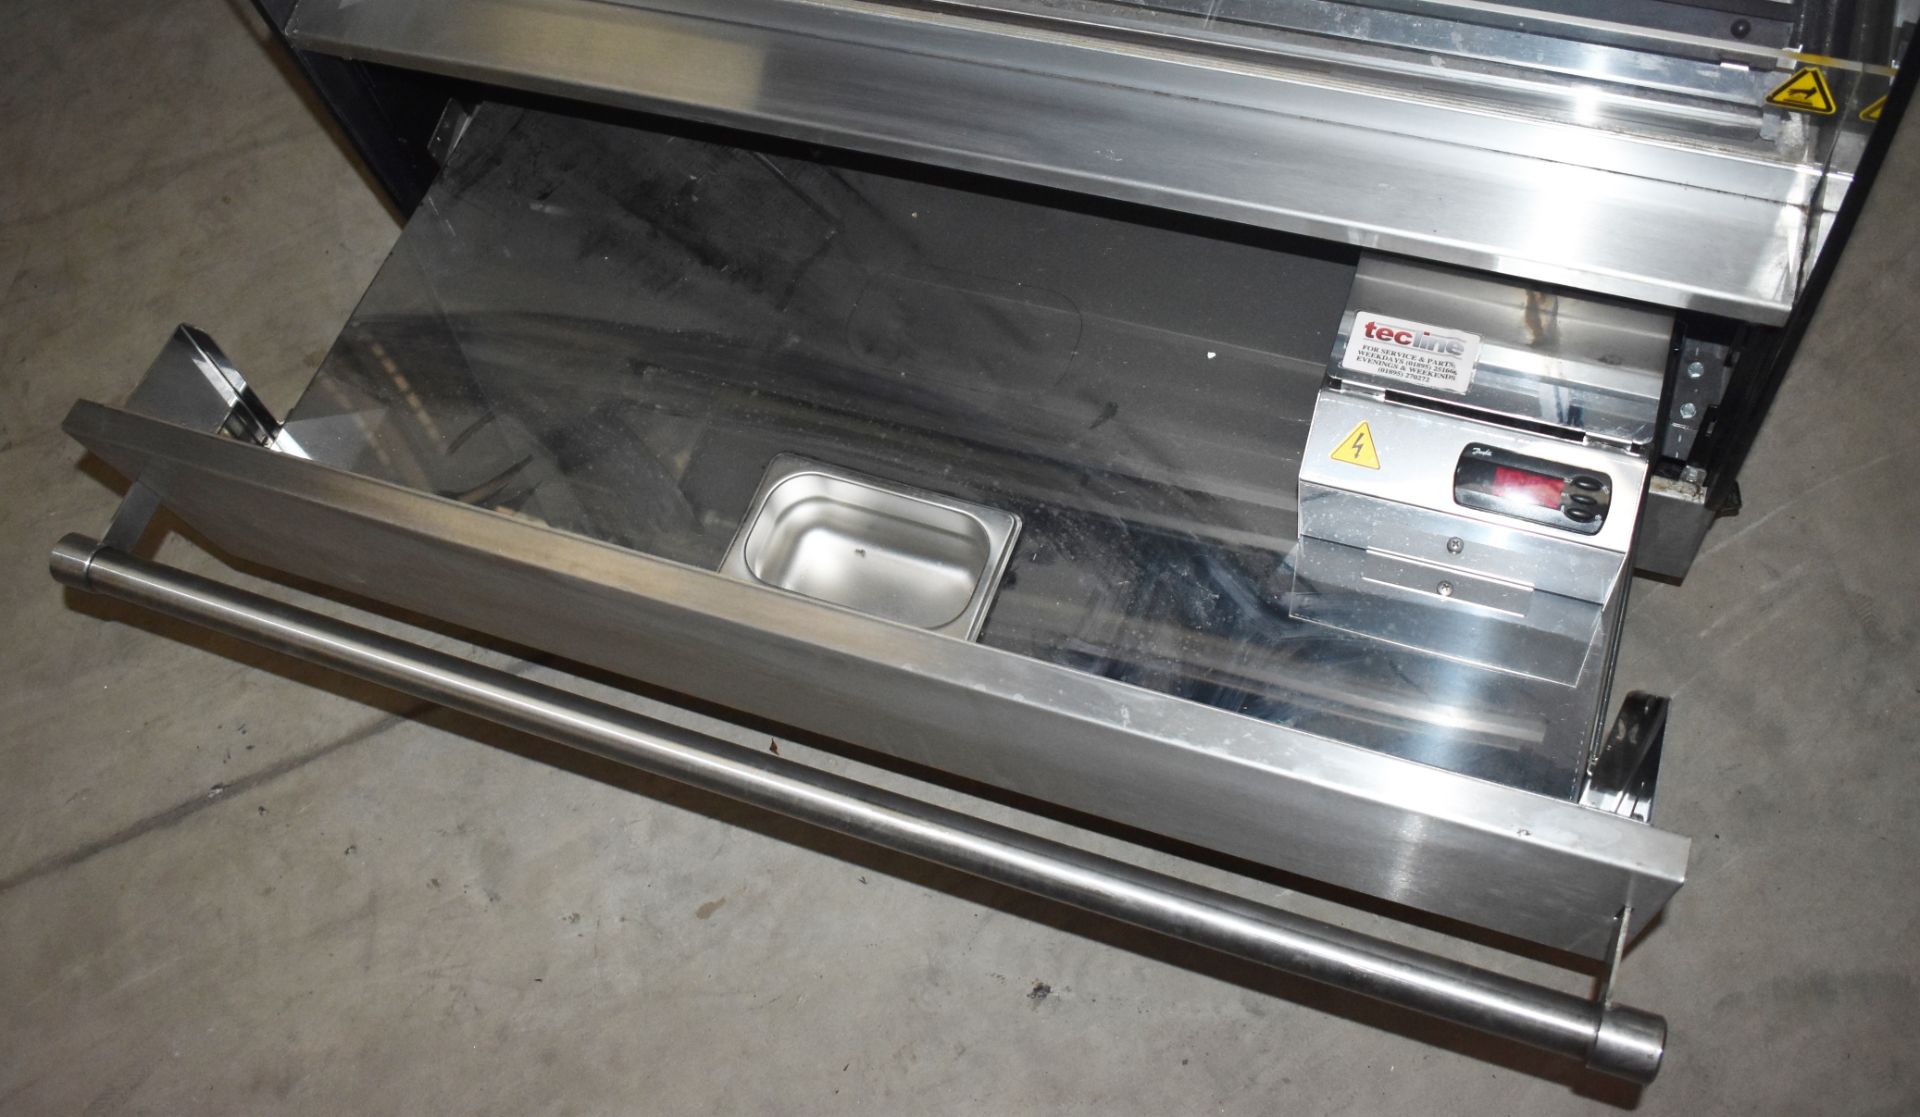 1 x Fri-Jado Three Tier Multi Deck Hot Food Warmer Heated Display Unit - Contemporary Modern - Image 4 of 9